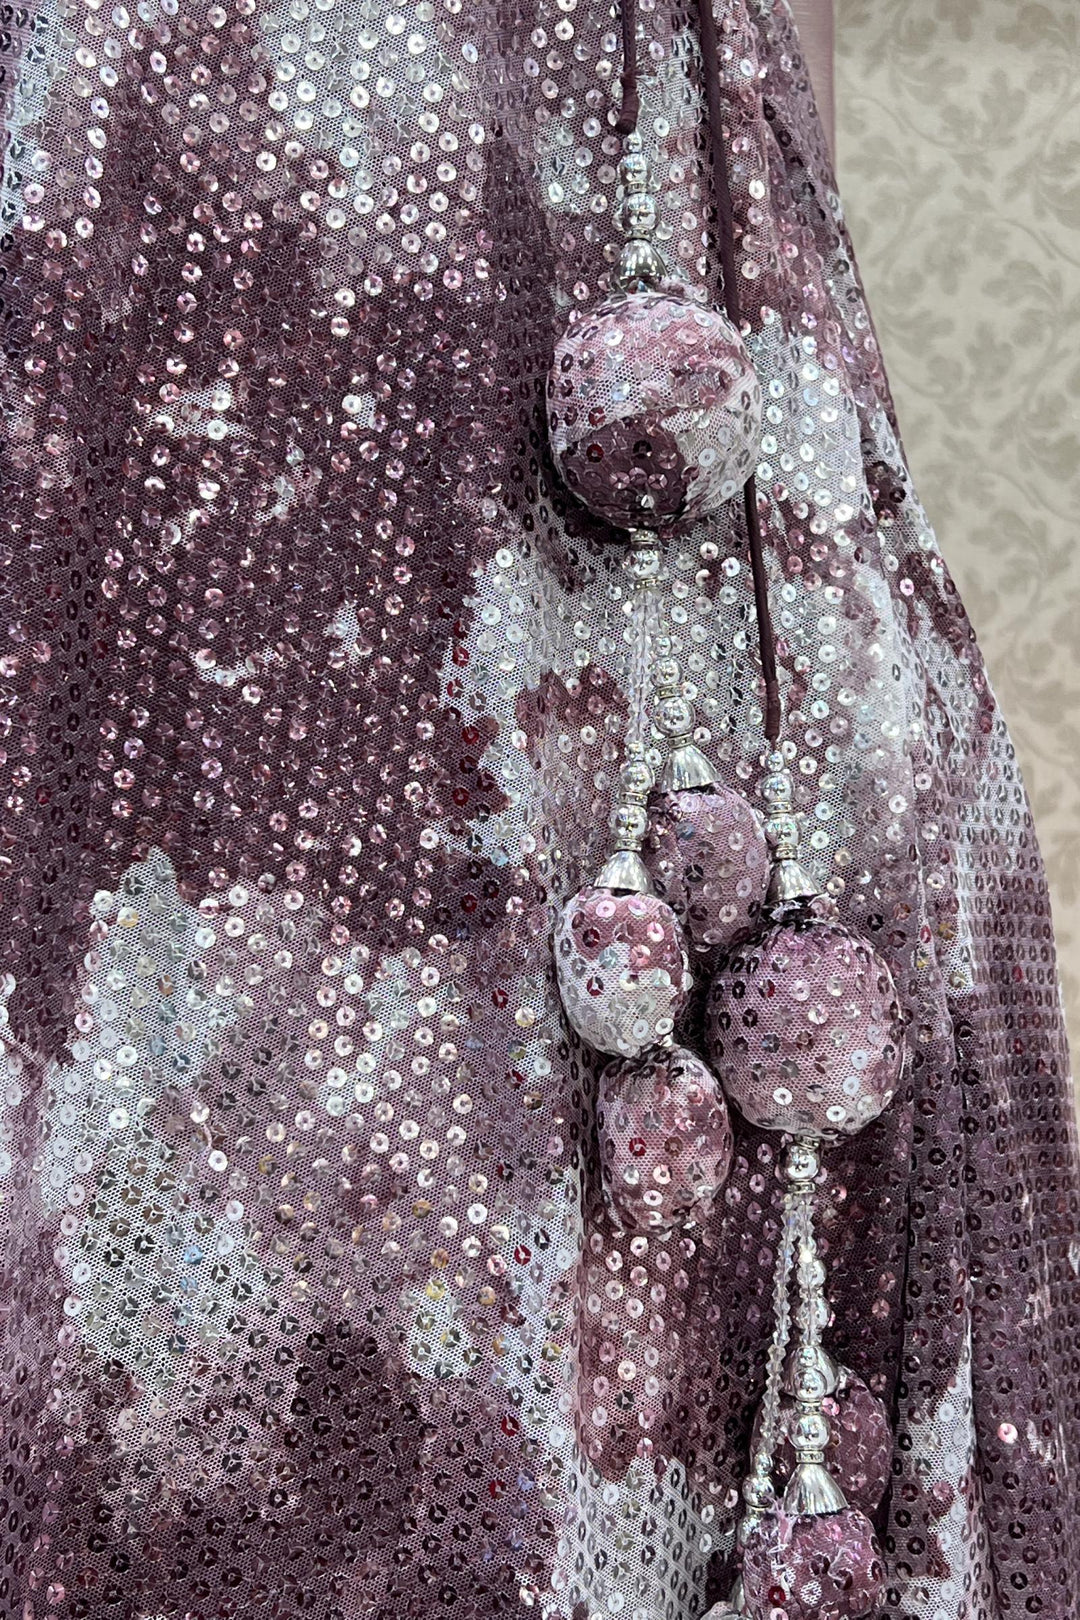 Onion Pink Tie and Dye Print, Stone, Beads and Pearls work Crop Top Lehenga - Seasons Chennai